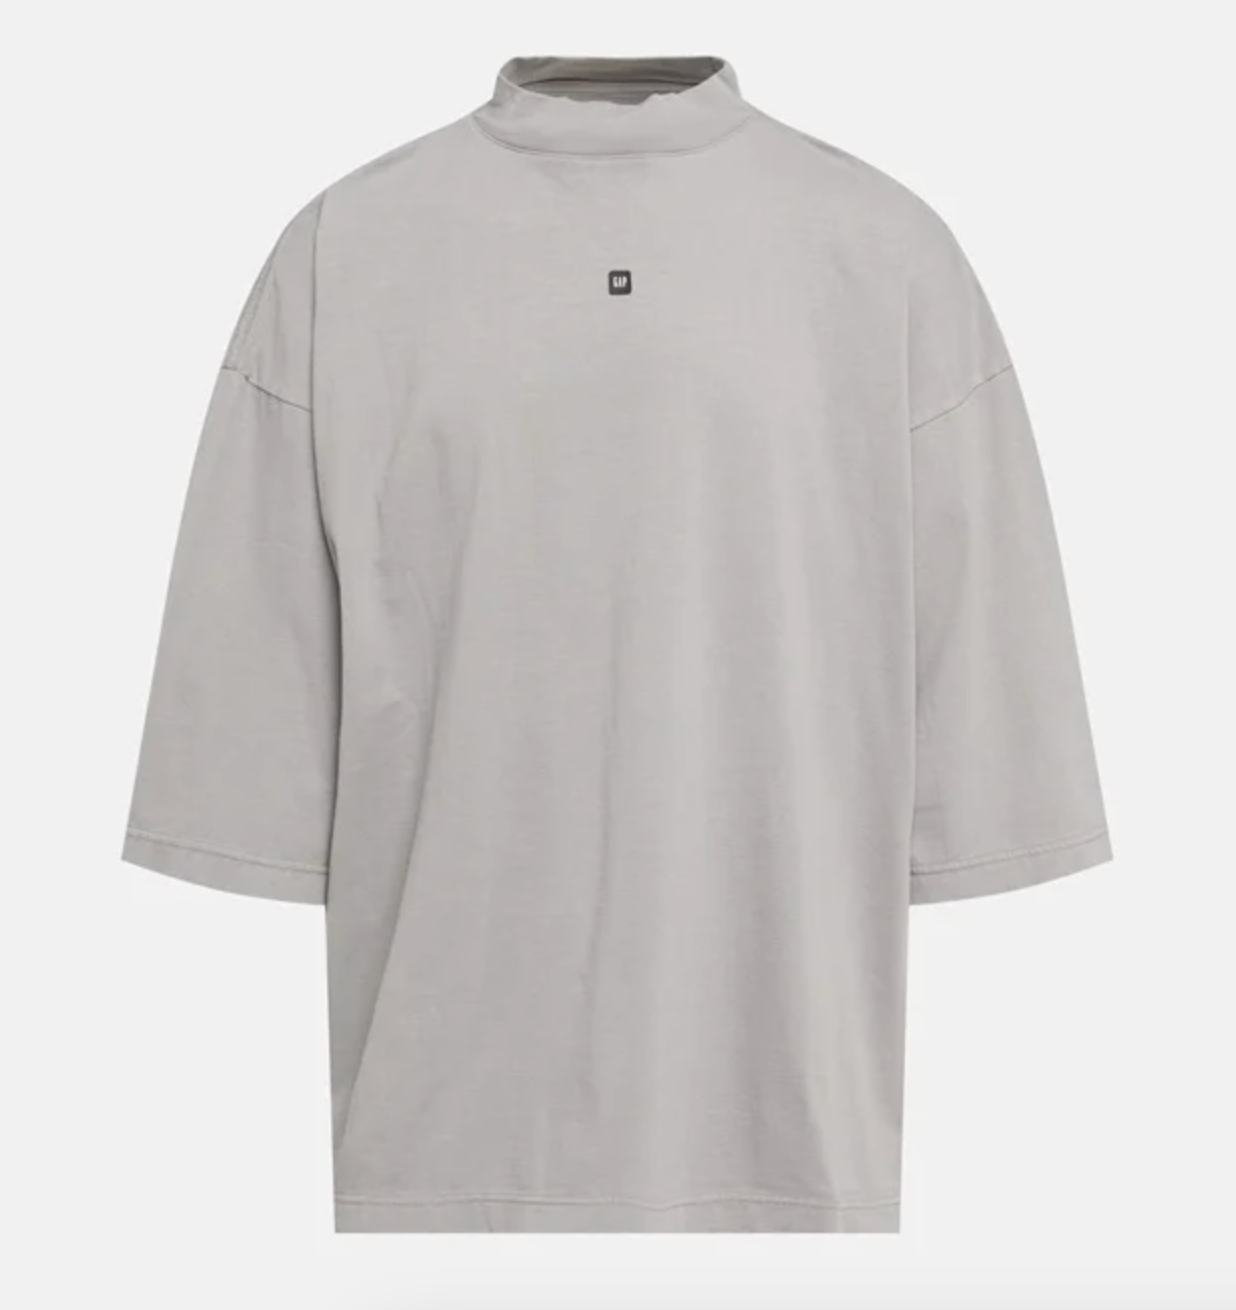 Yeezy Gap Engineered by Balenciaga T-Shirt 3/4 Dark Grey Front Lodz Polska